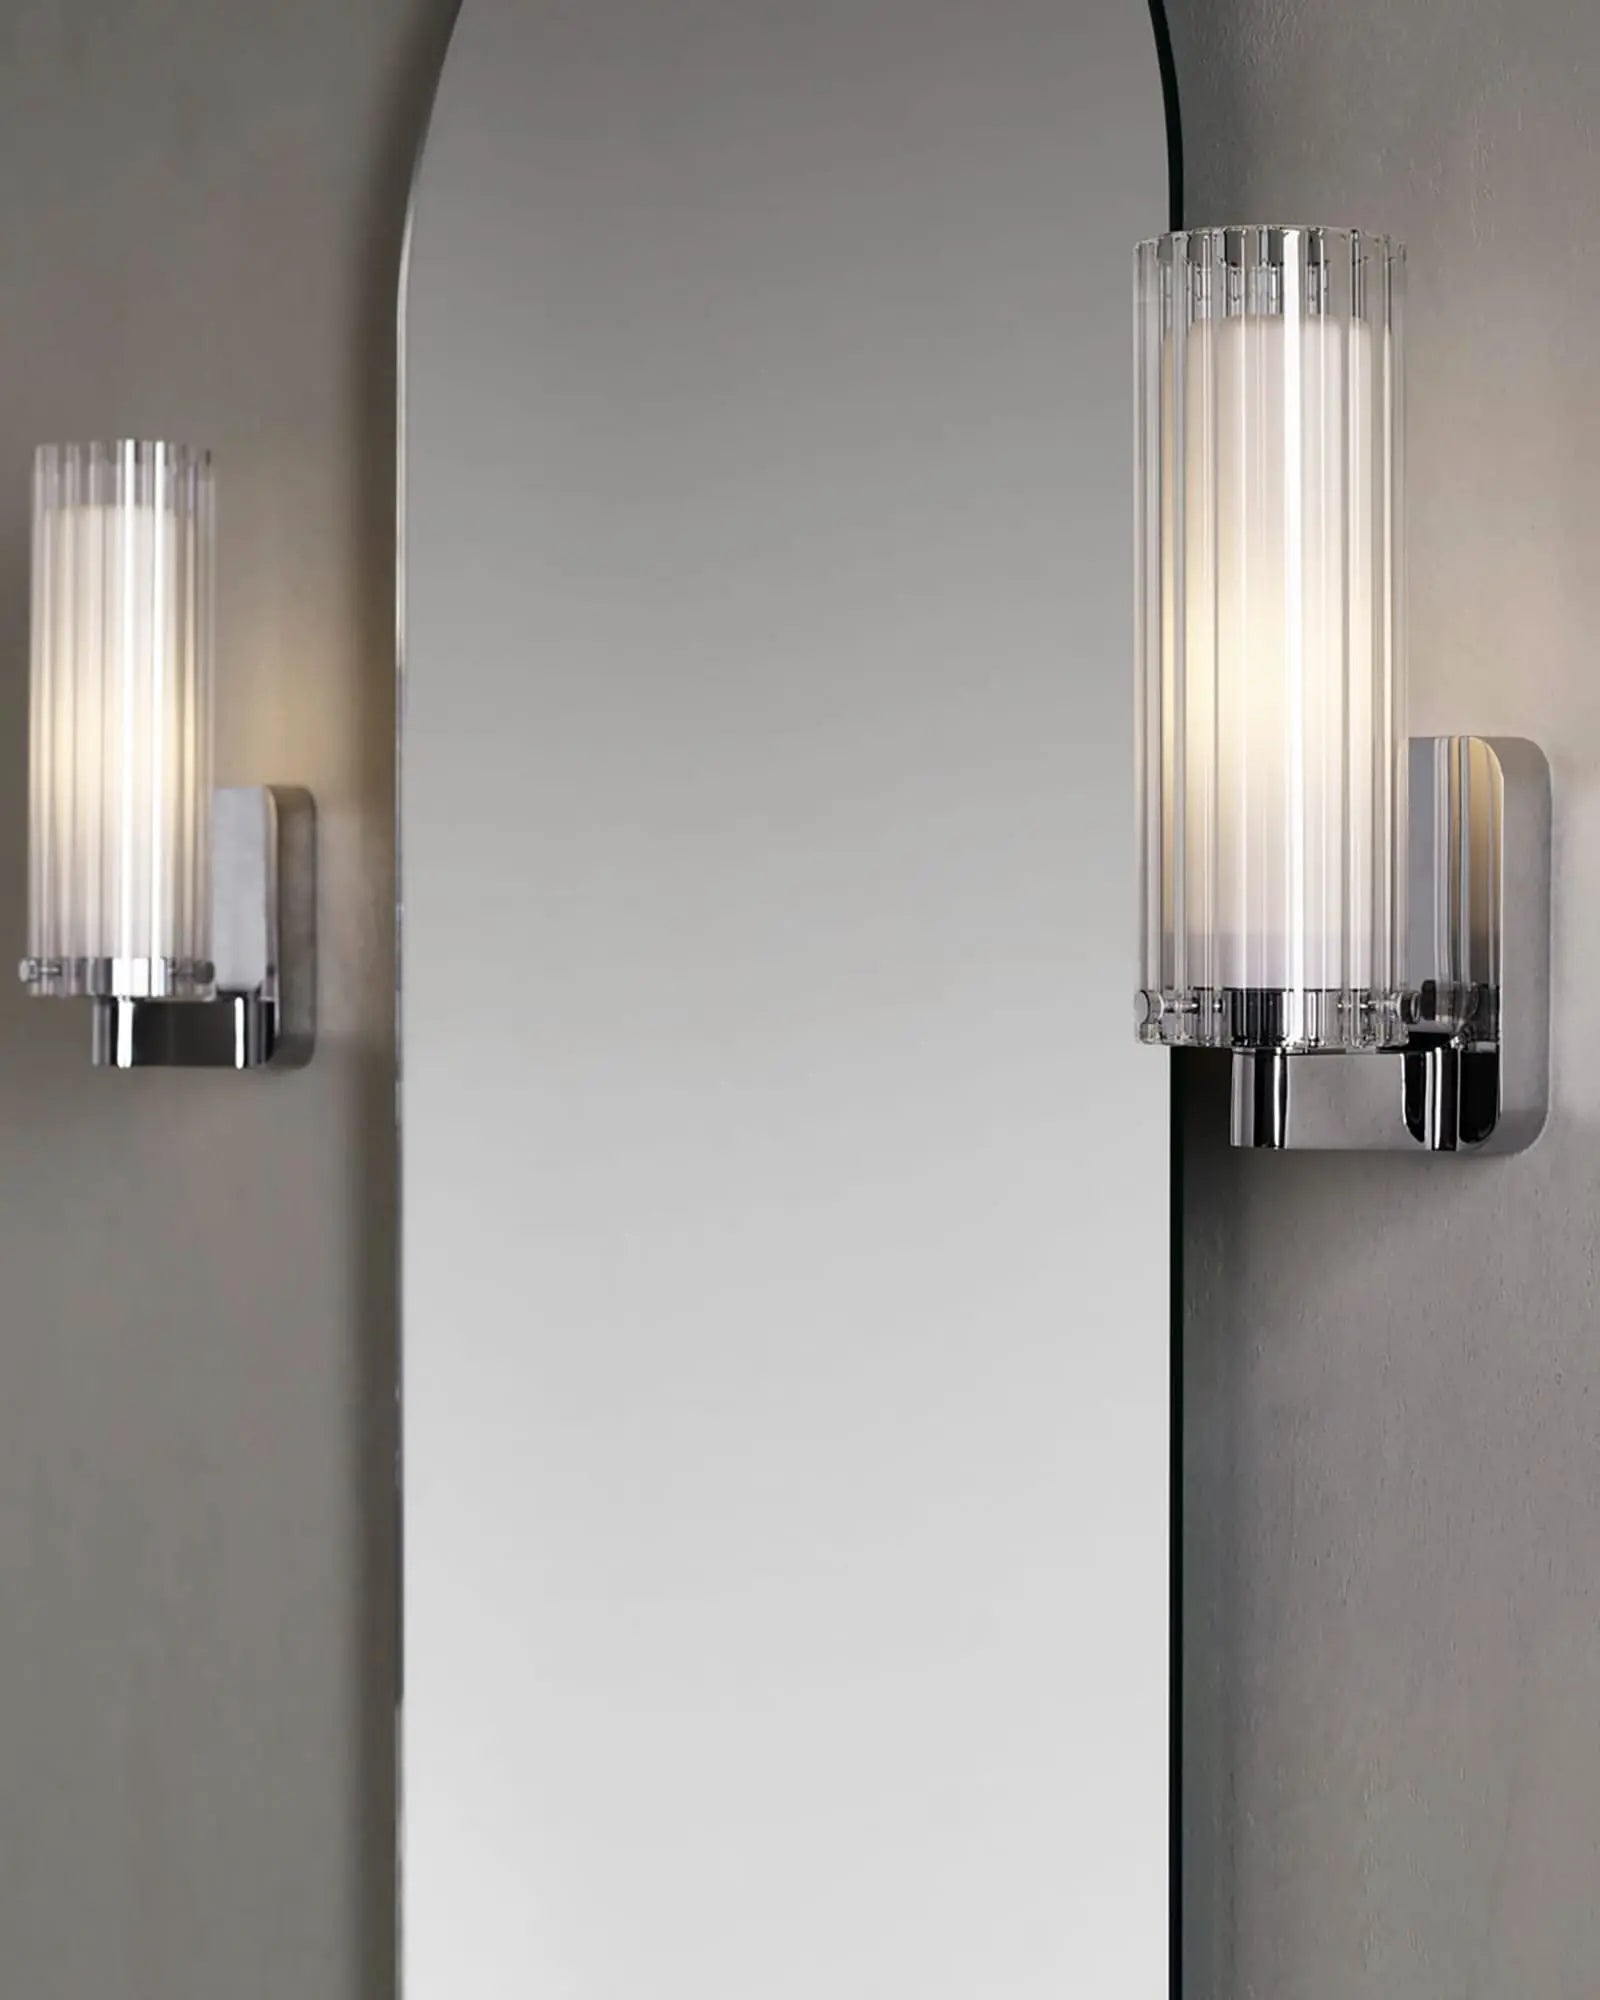 Ottavino ribbed glass and chrome bathroom wall light mirror's side detail